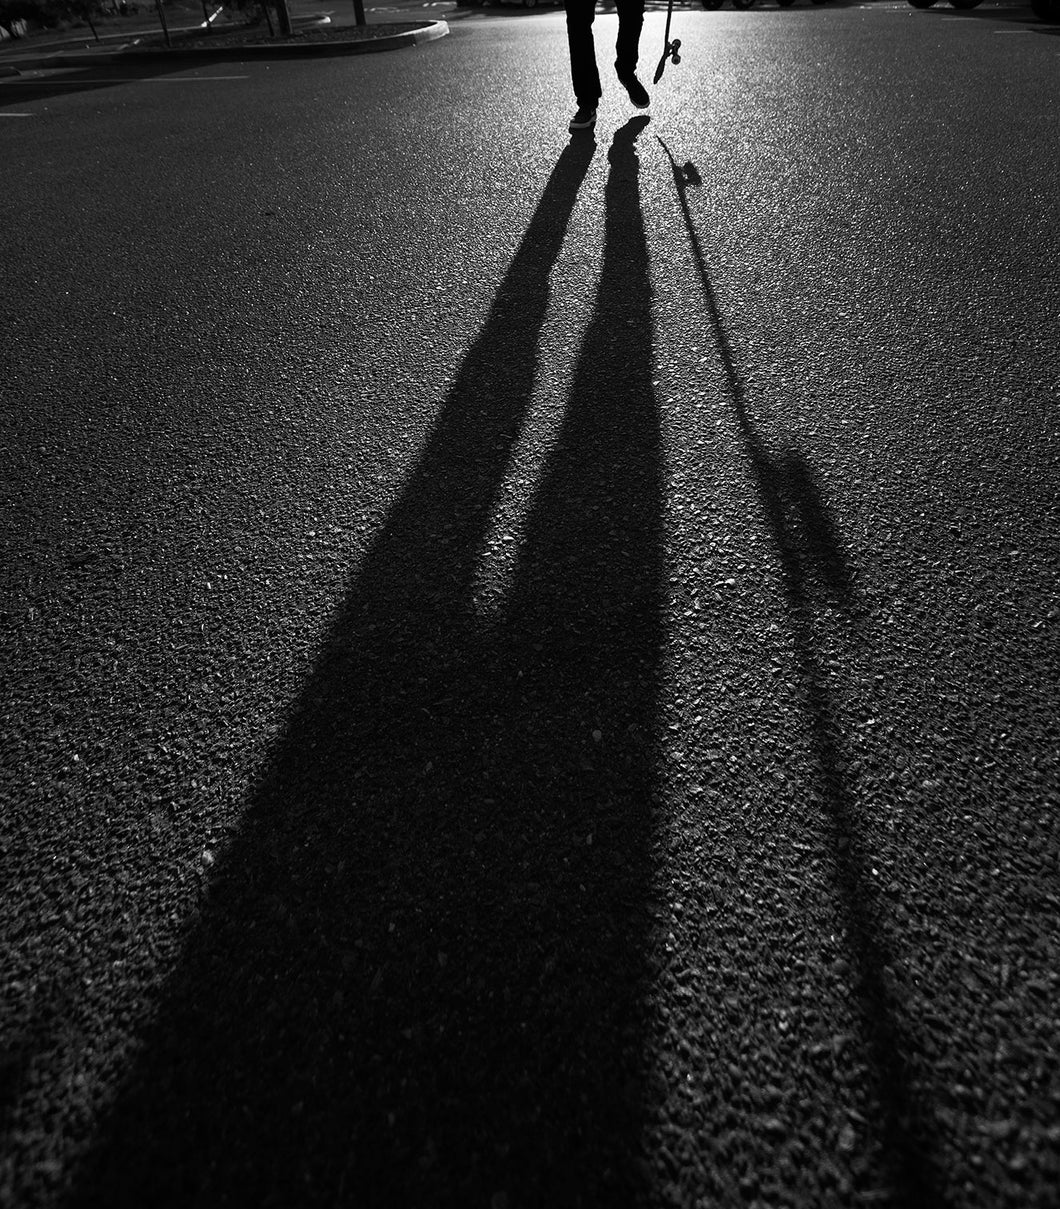 Skateboarder Shadow Photograph 11x14, 16x20, 18x24, and 30x40